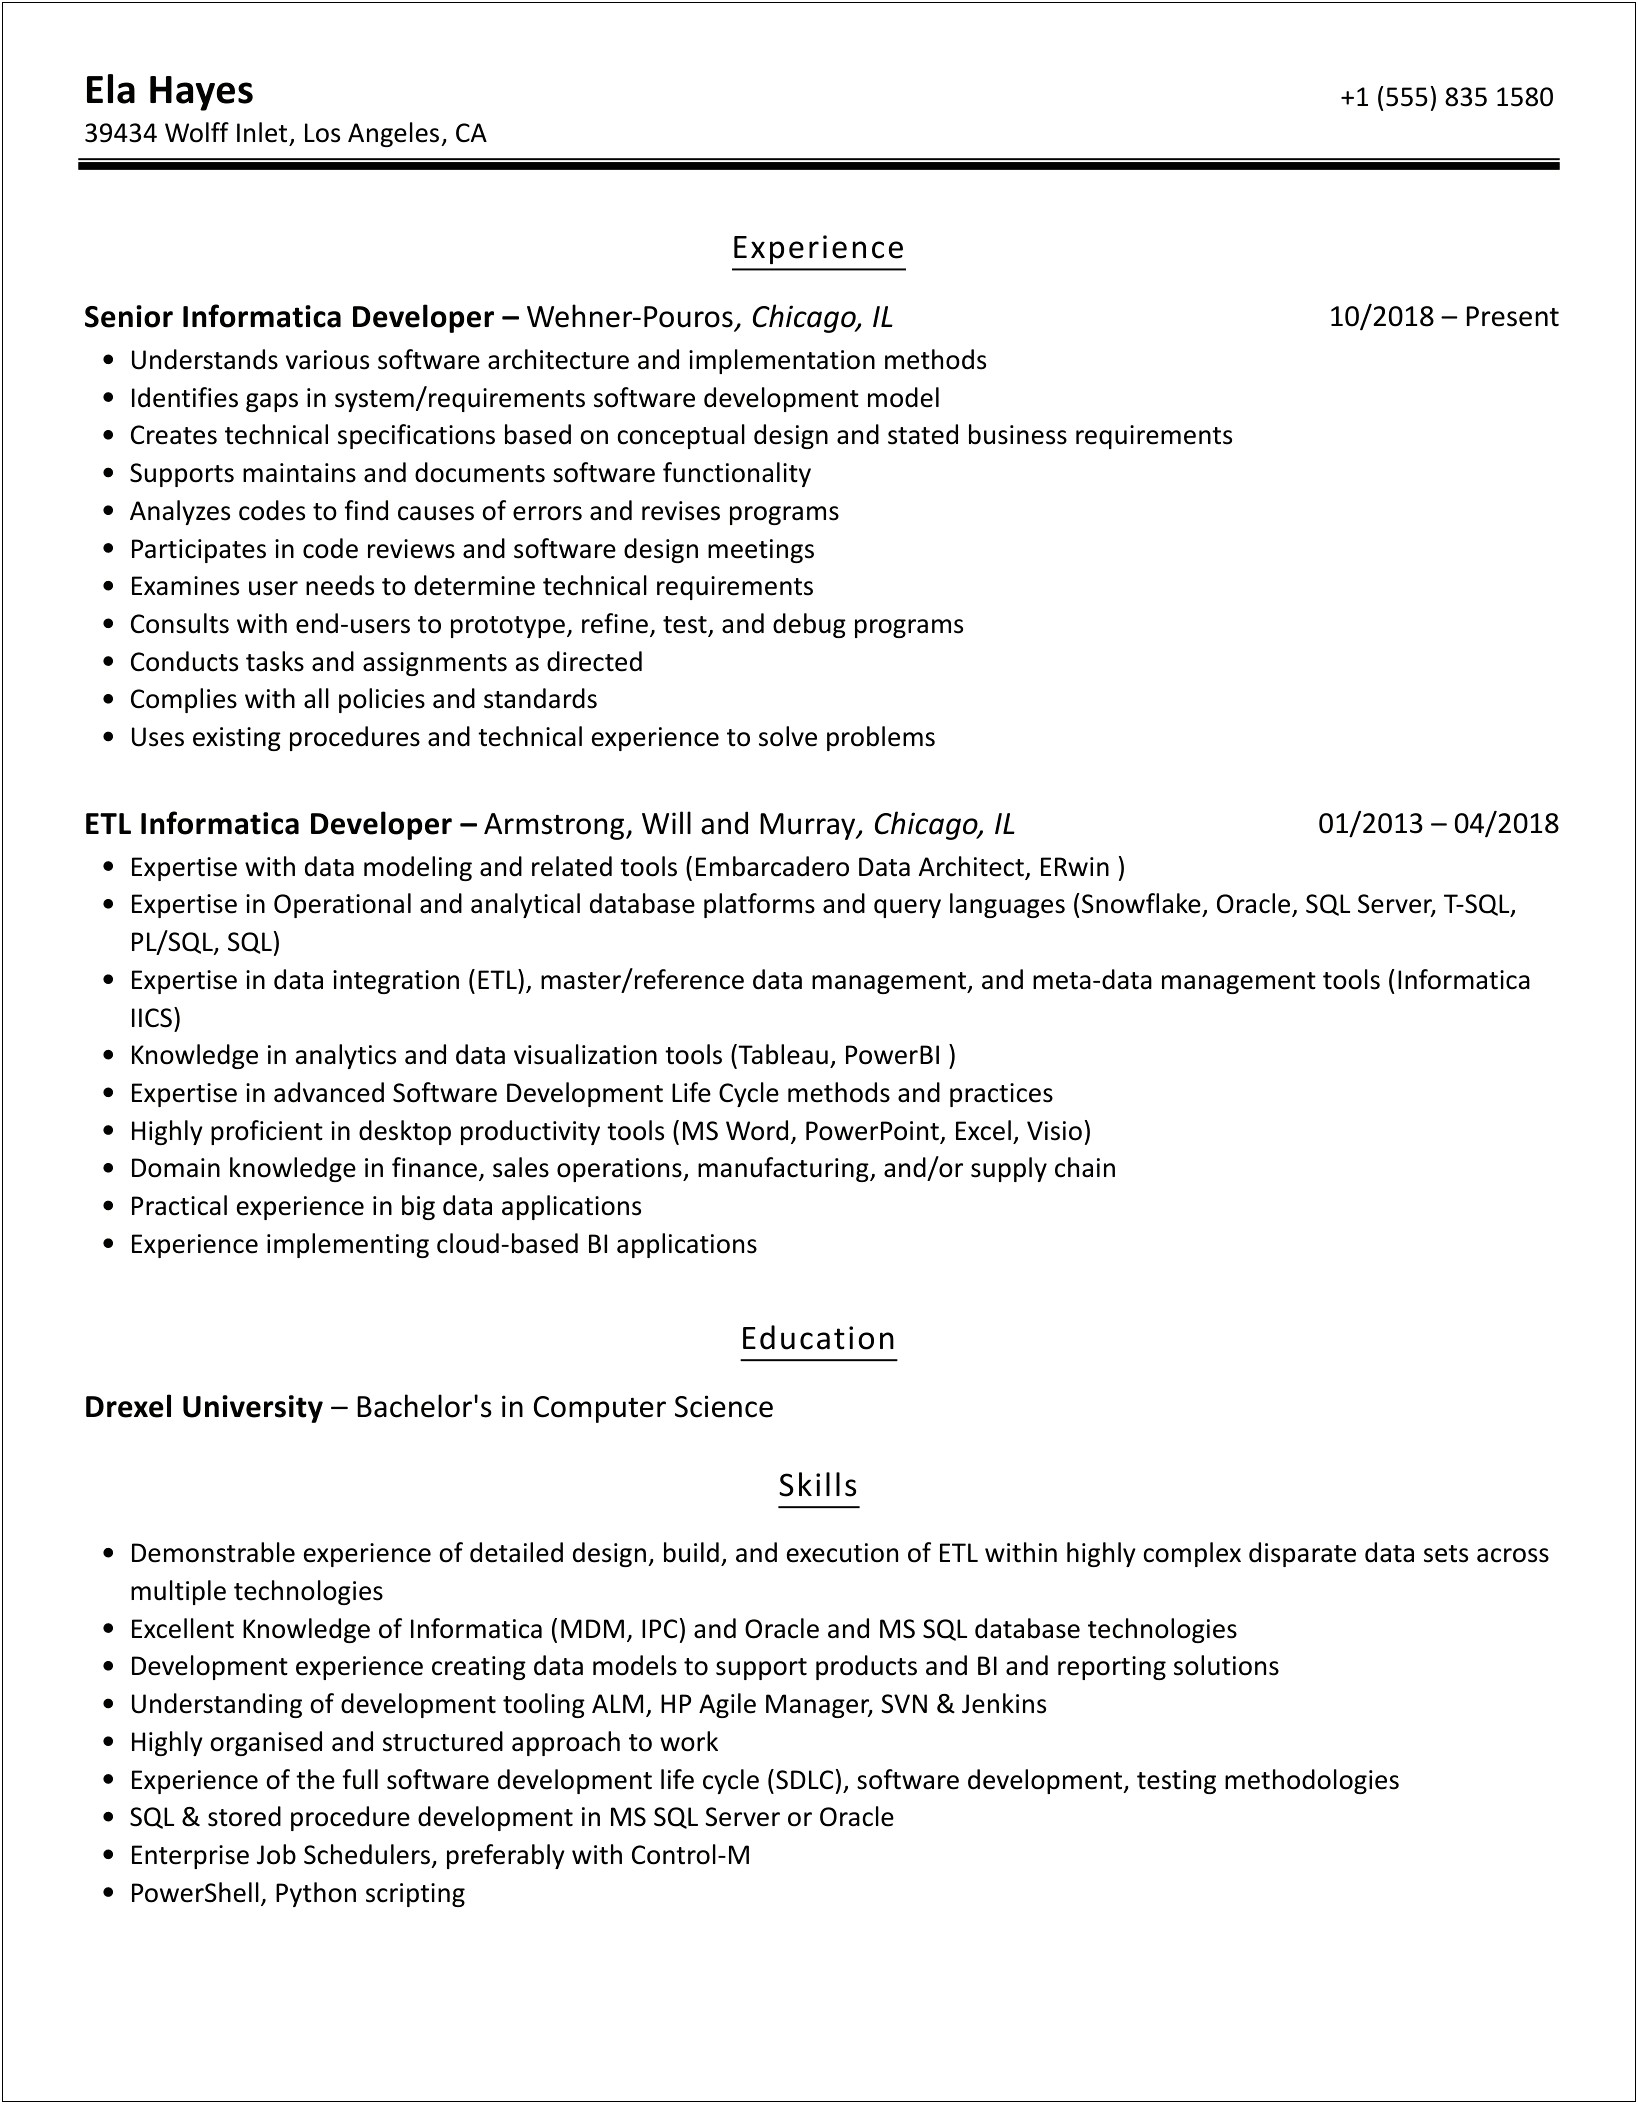 Sample Resume For Informatica Developer With Salesforce